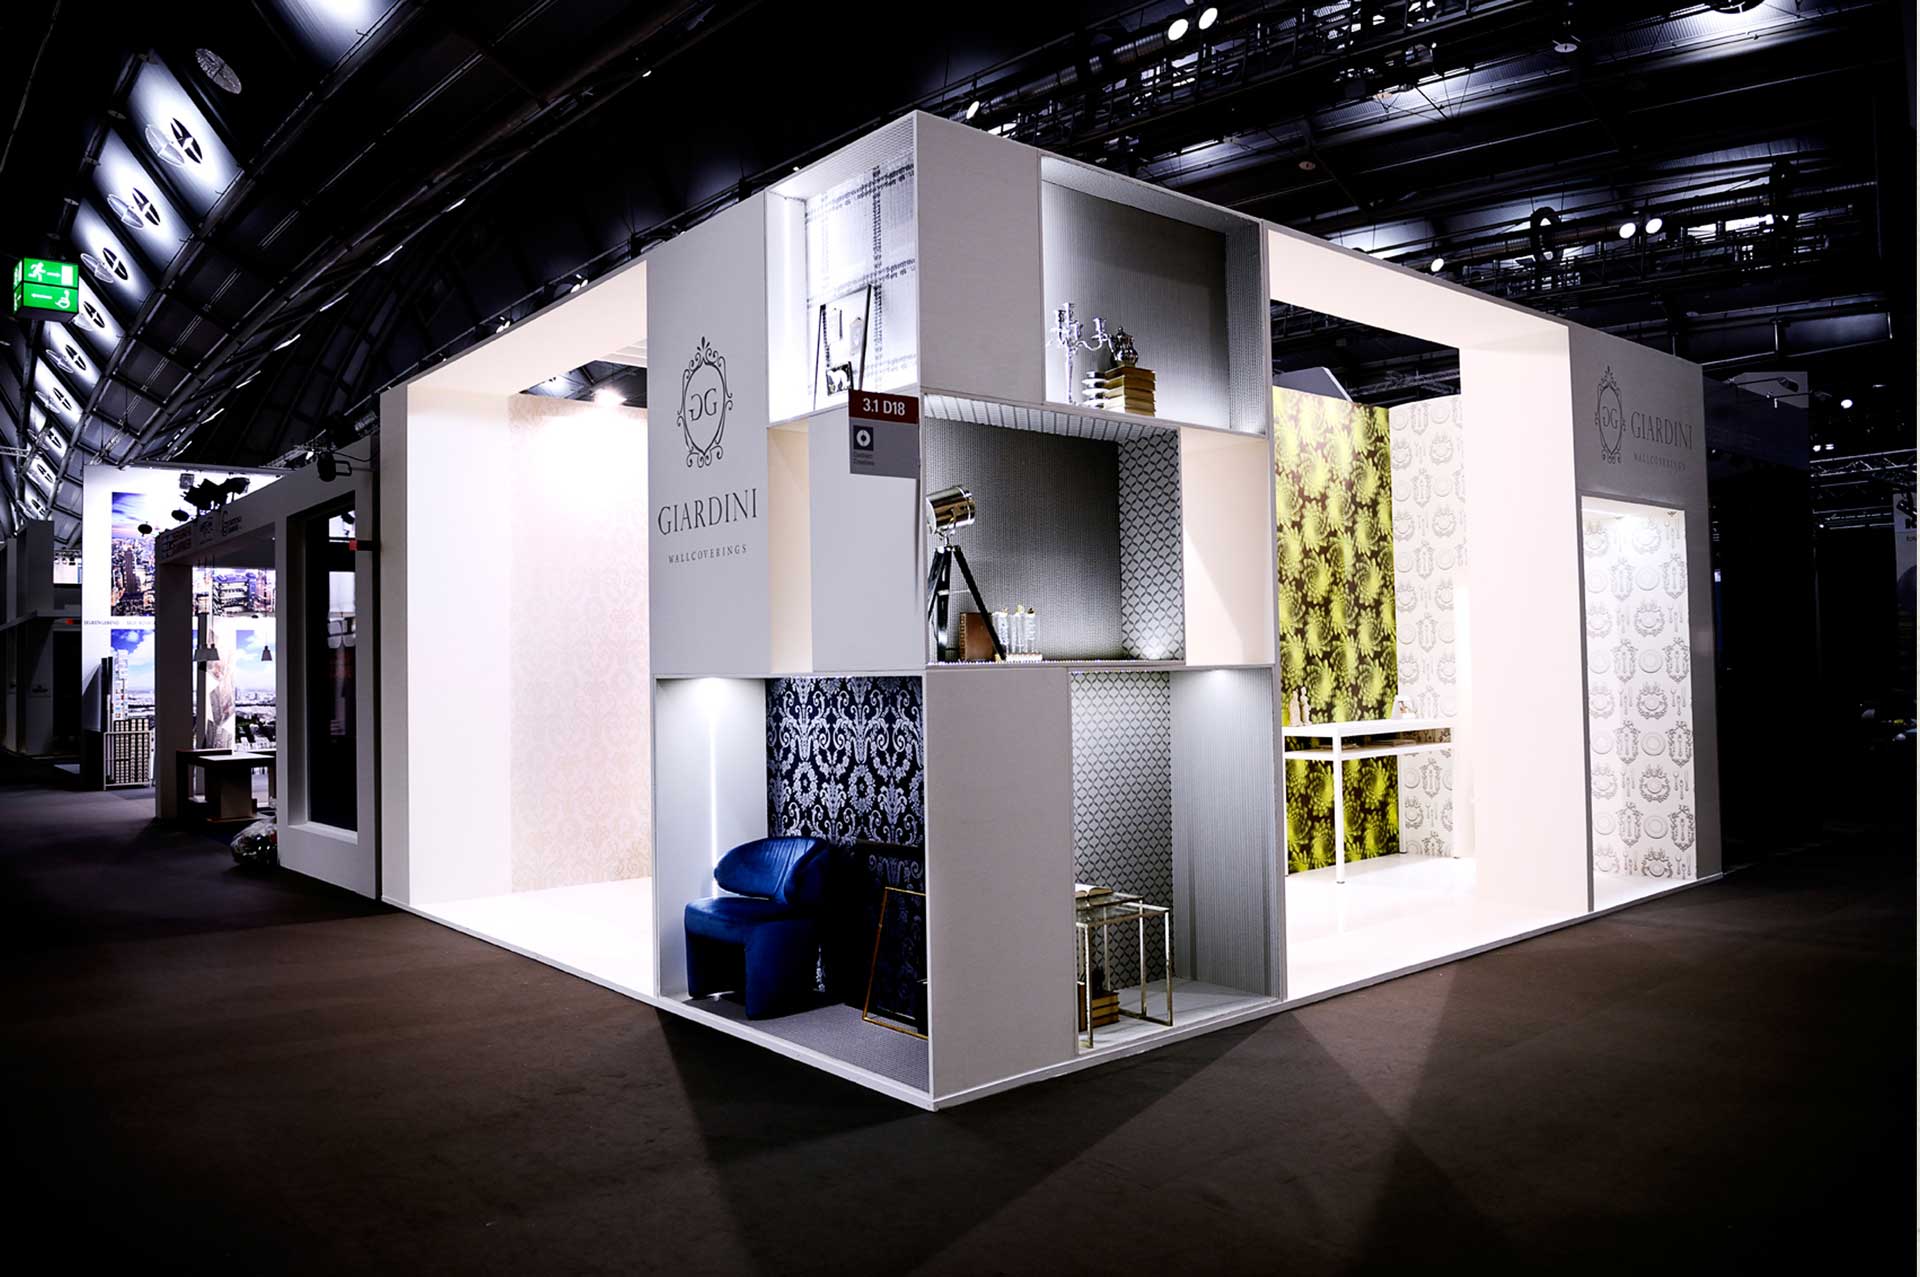 Giardini Maison Objet 2012 exhibition interior design 04